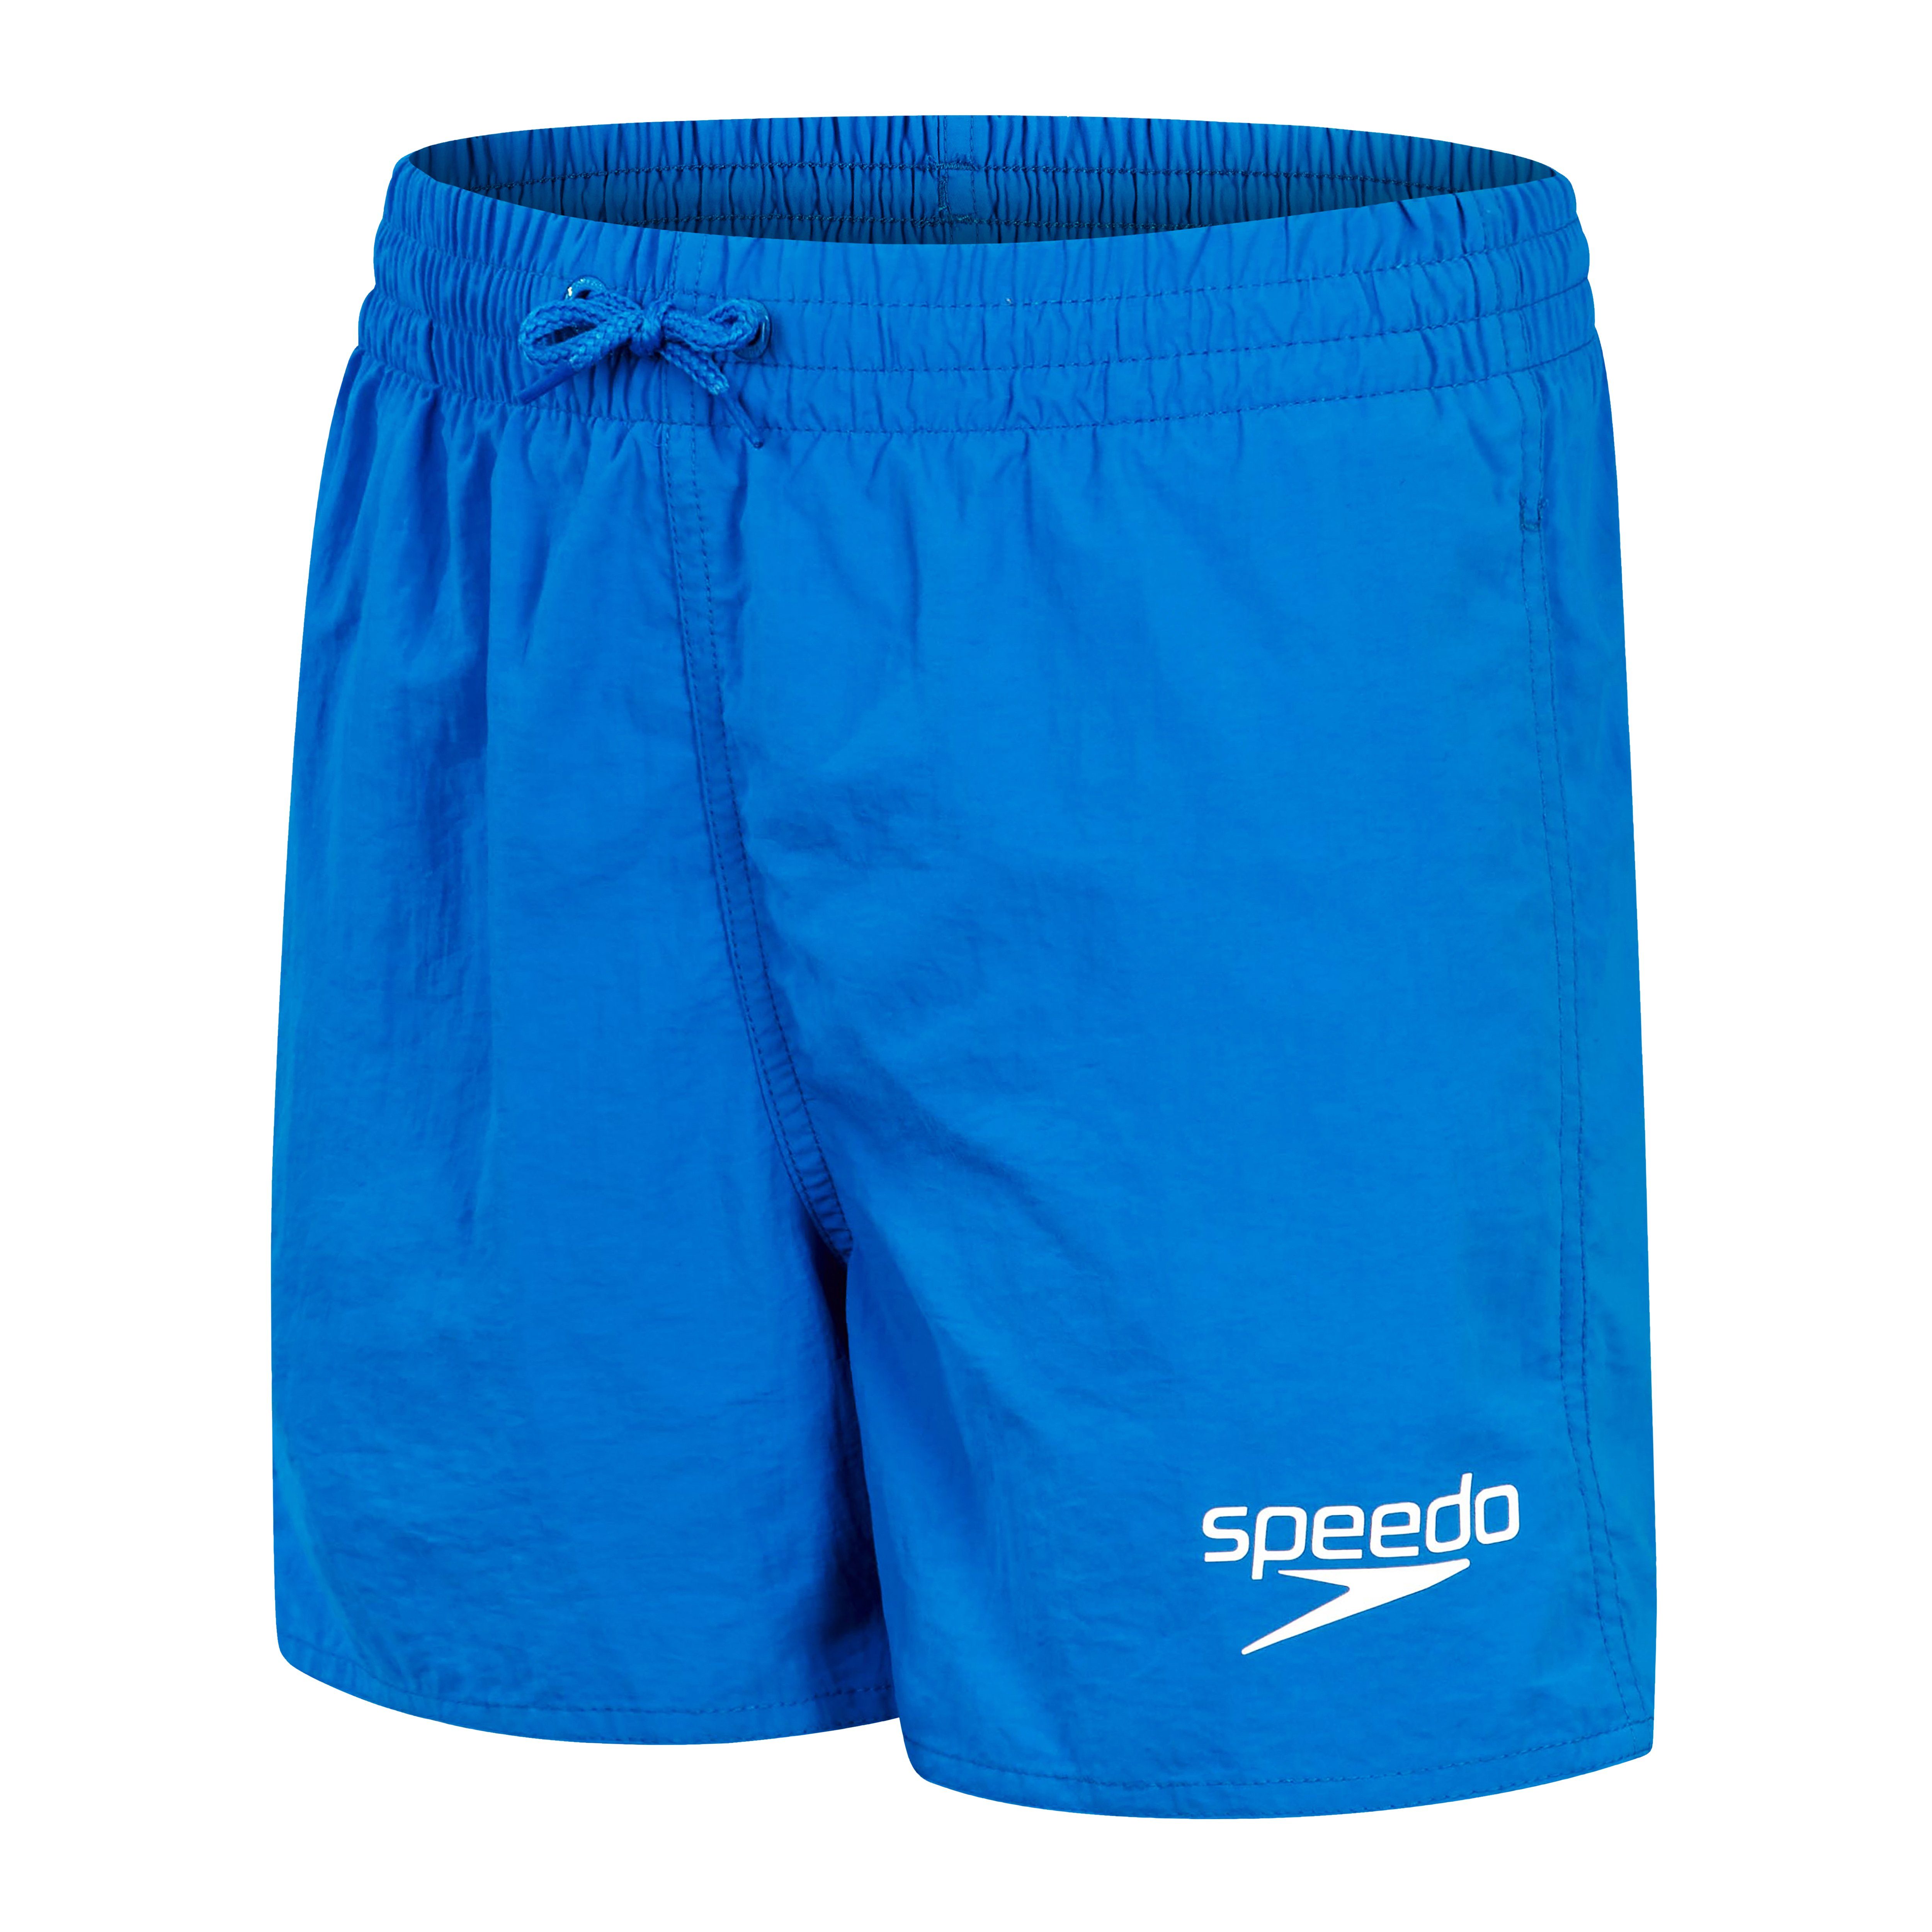 Speedo Badeshorts Kinder Passform John Verstellbare Bade-Shorts blau